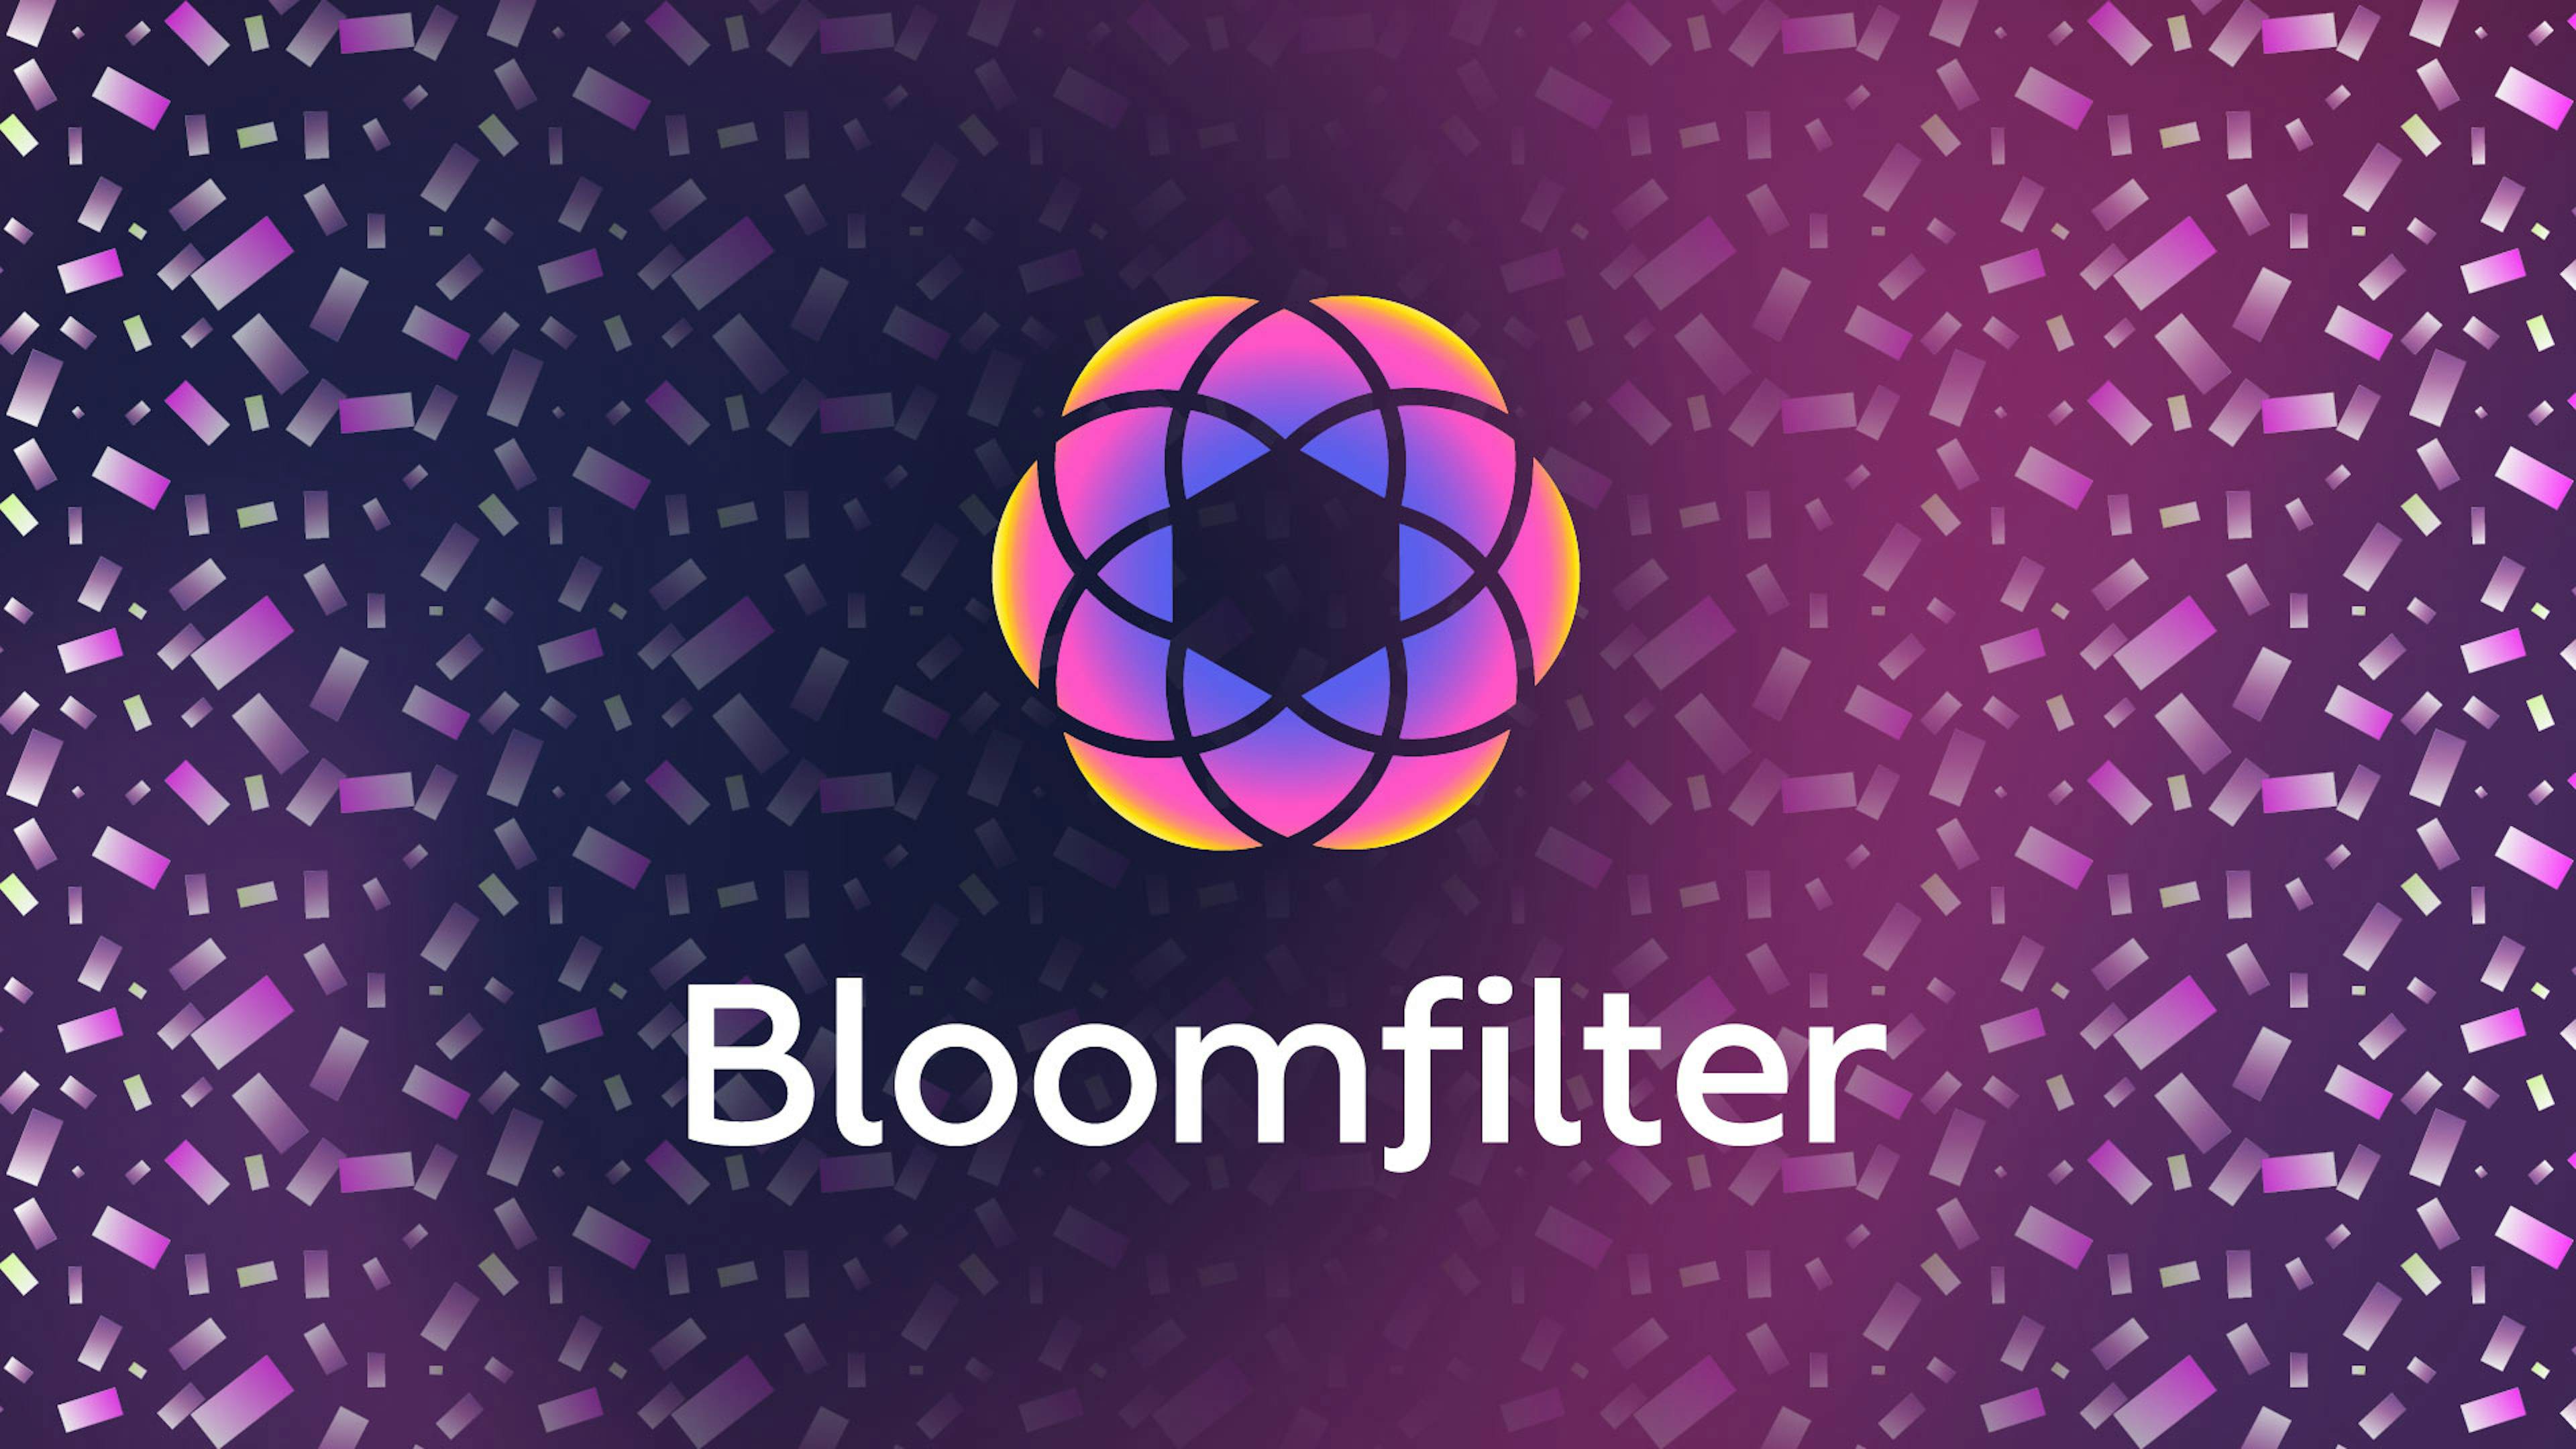 Bloomfilter portco logo